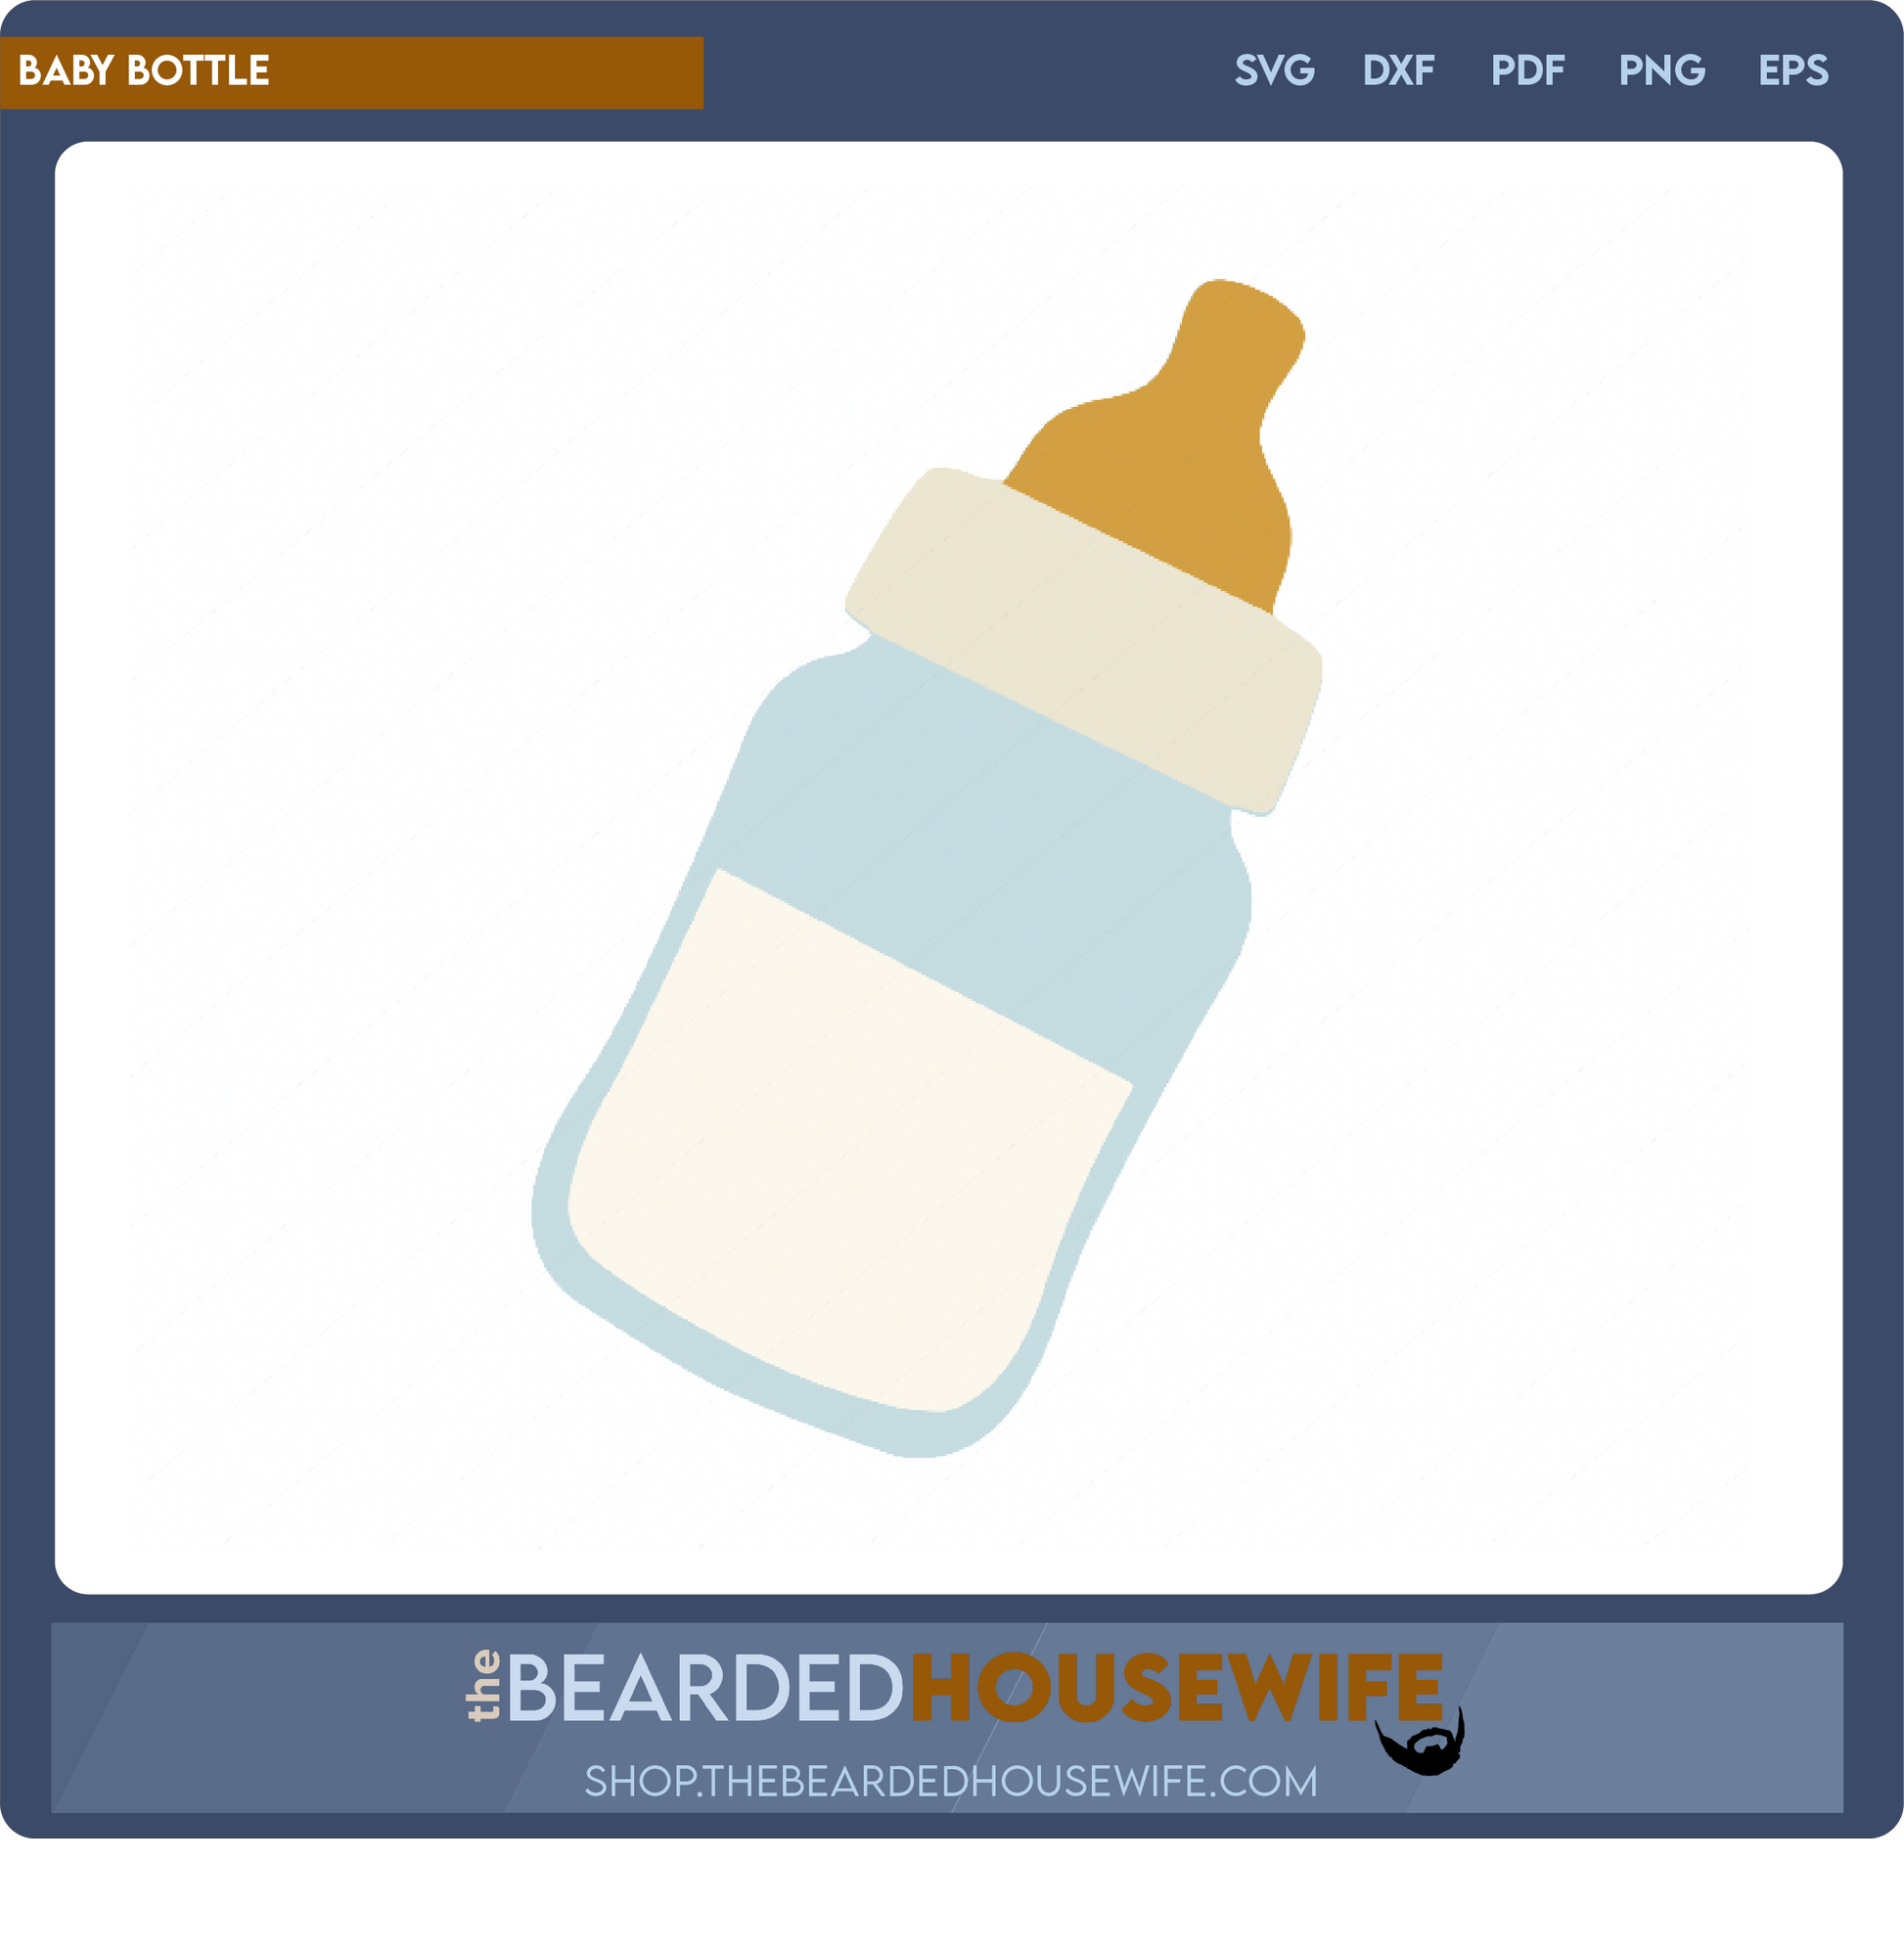 baby bottle - the bearded housewife